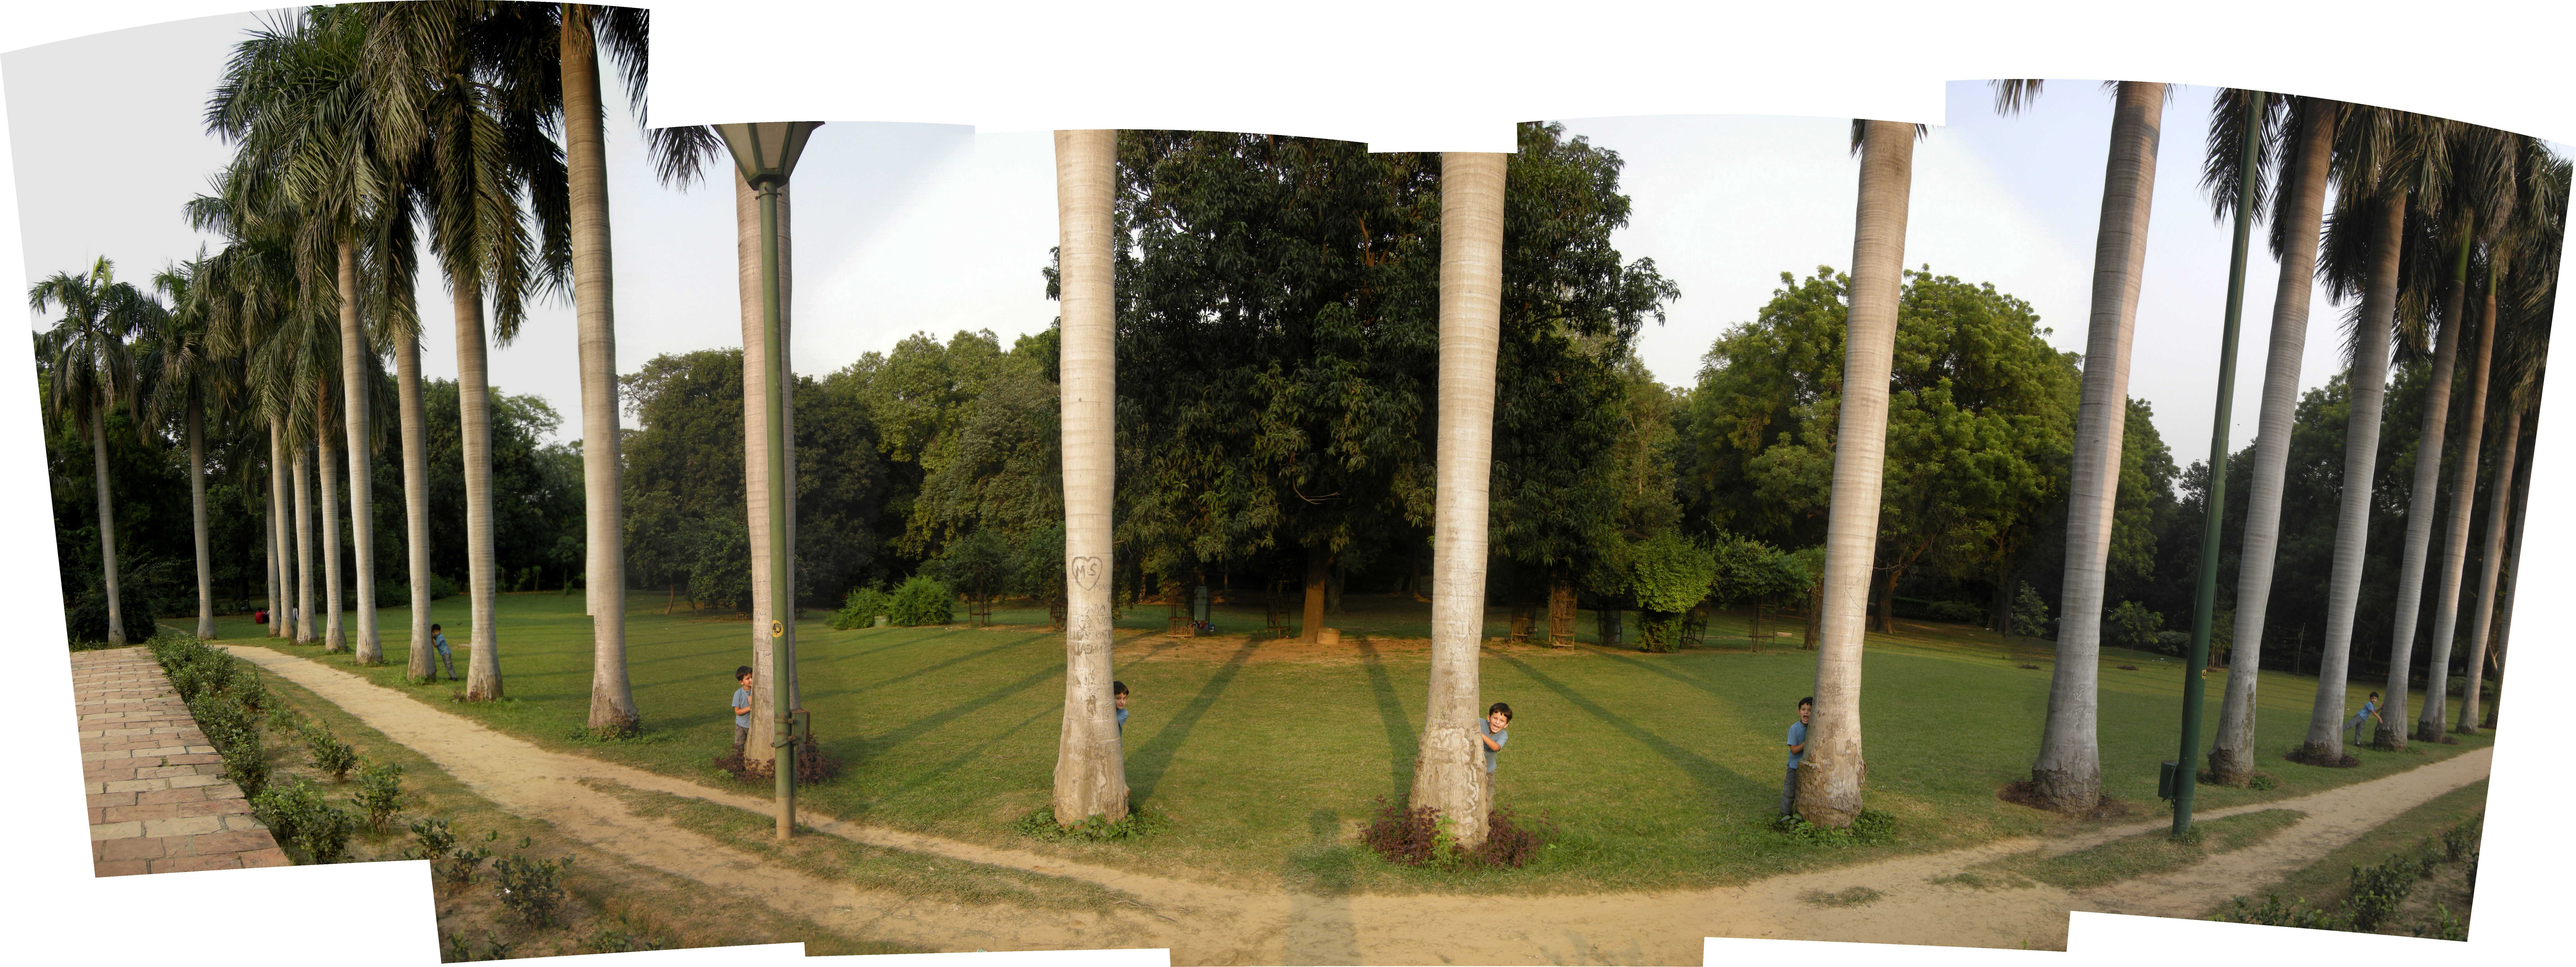 Rahil behind trees at Lodhi Garden (2 October 2010)